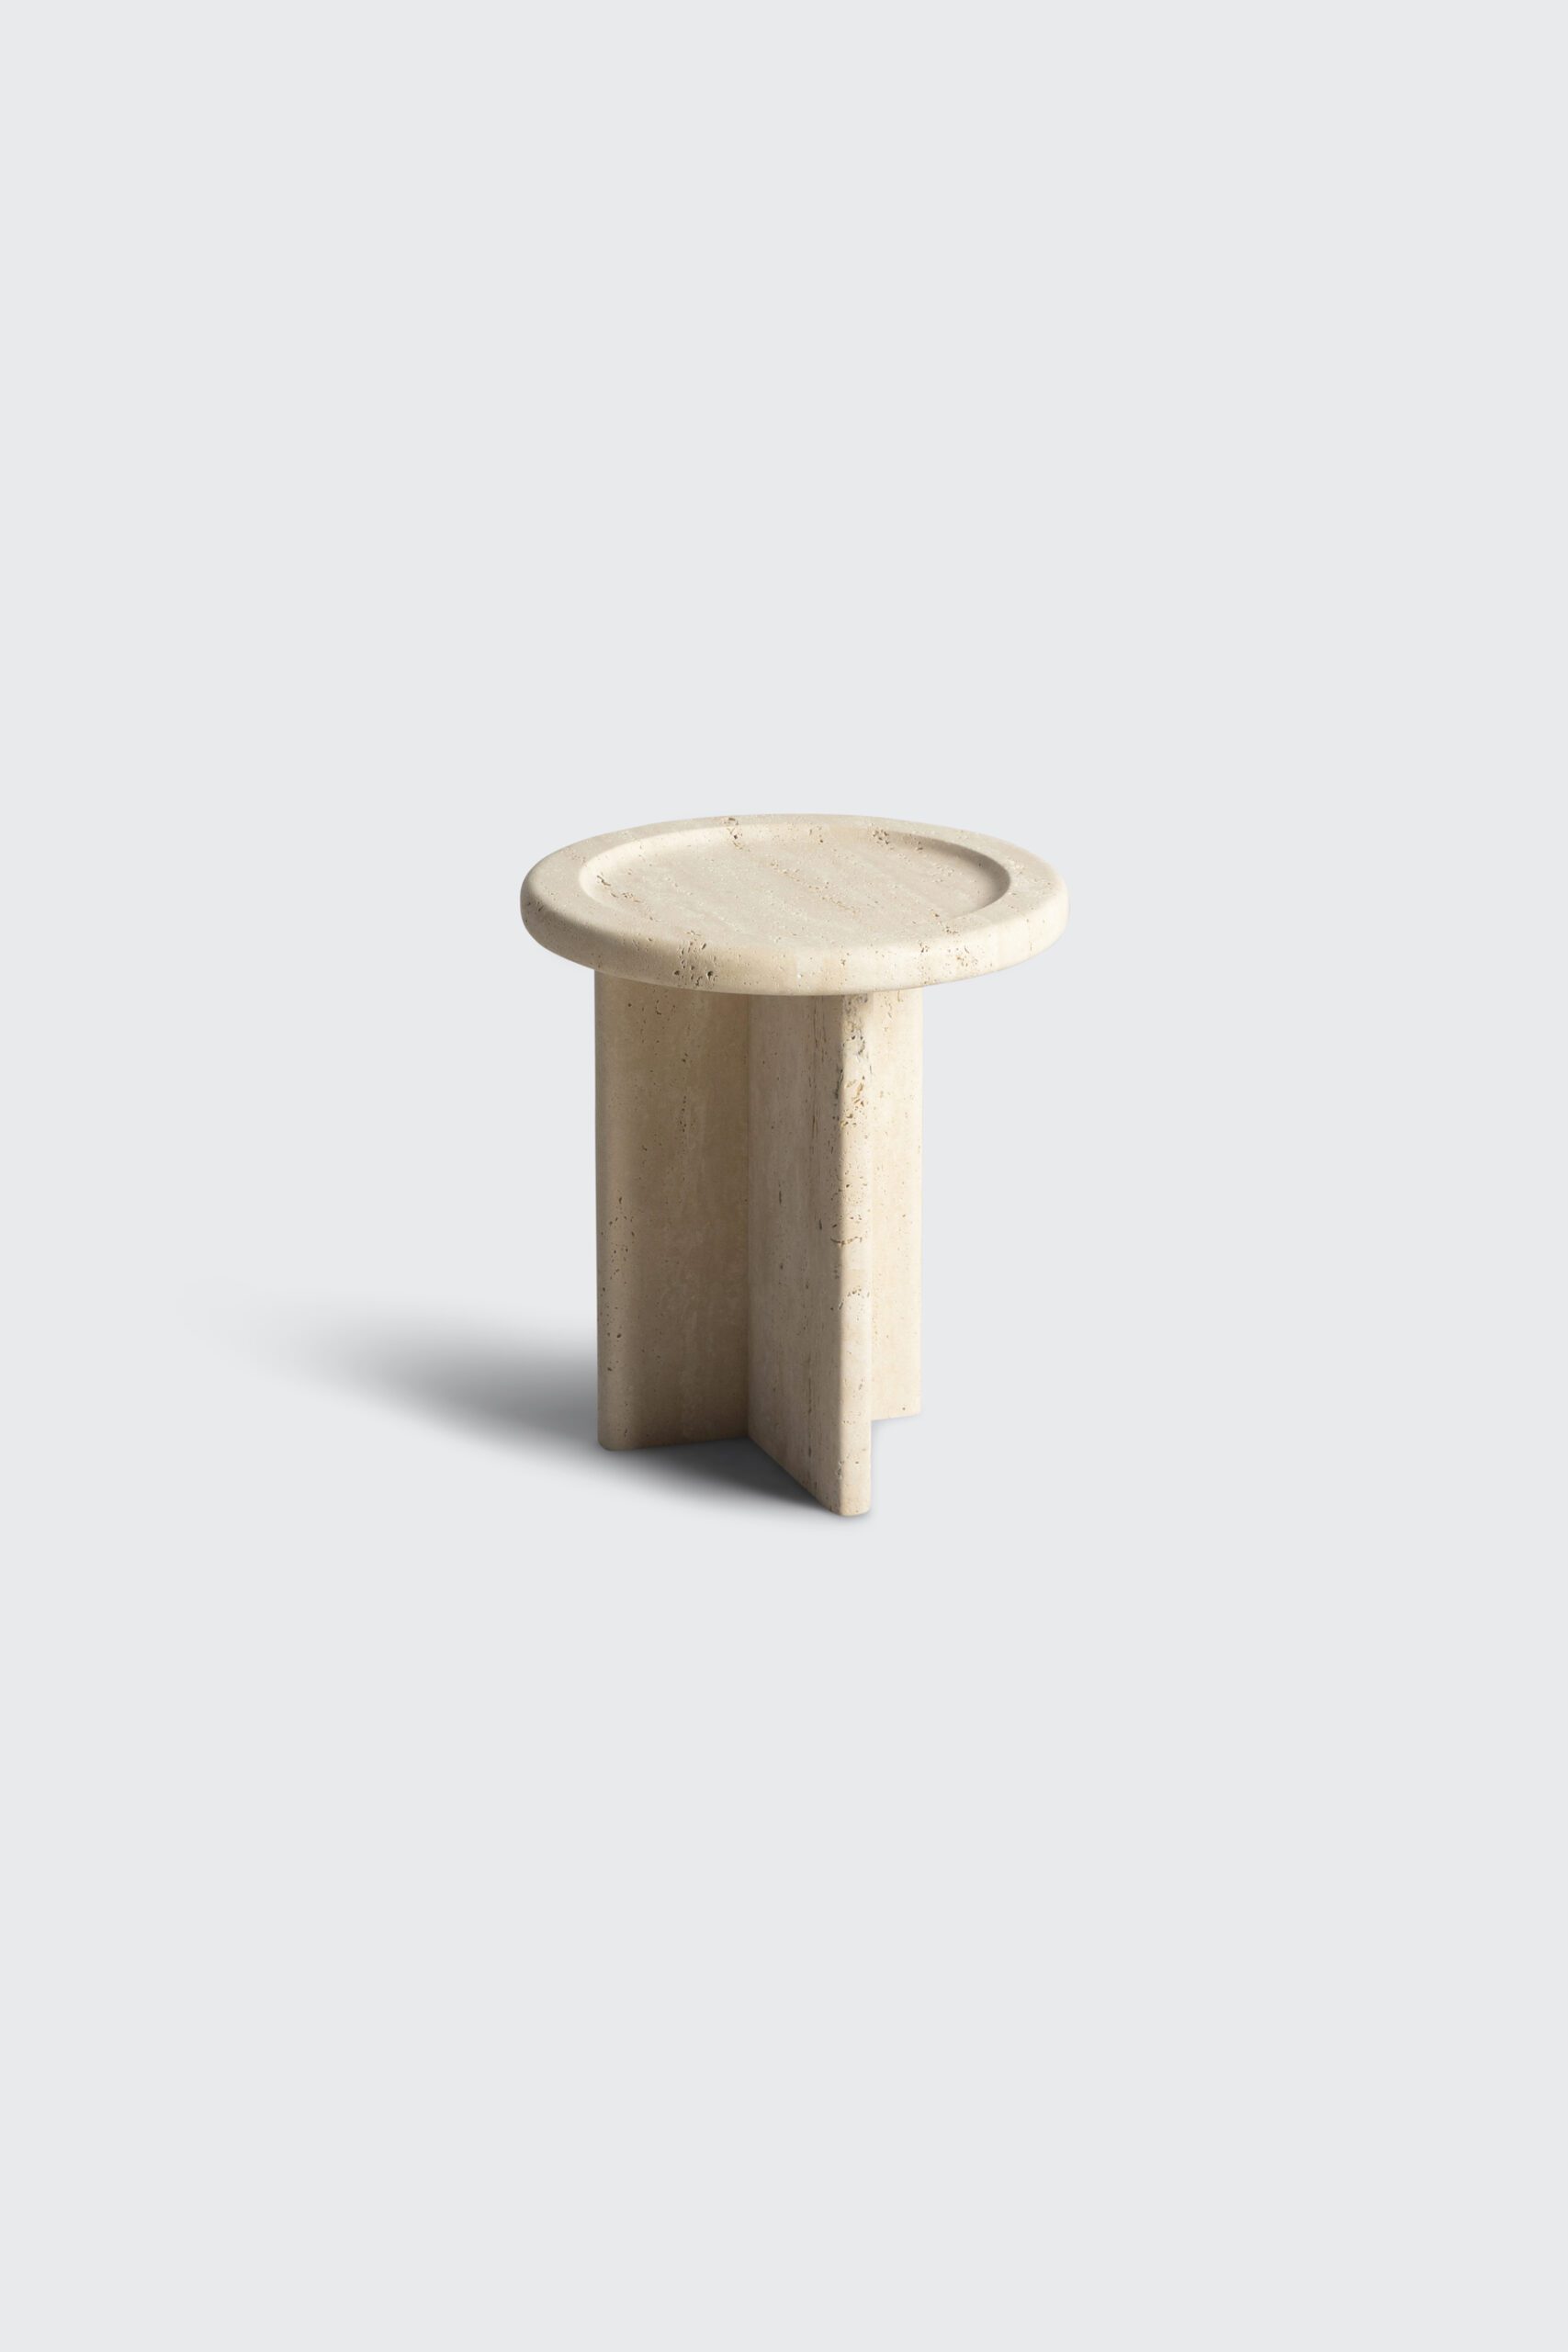 SAV travertine coffee table petite interior design architecture product seating luxury natural stone divine duo sculpture 